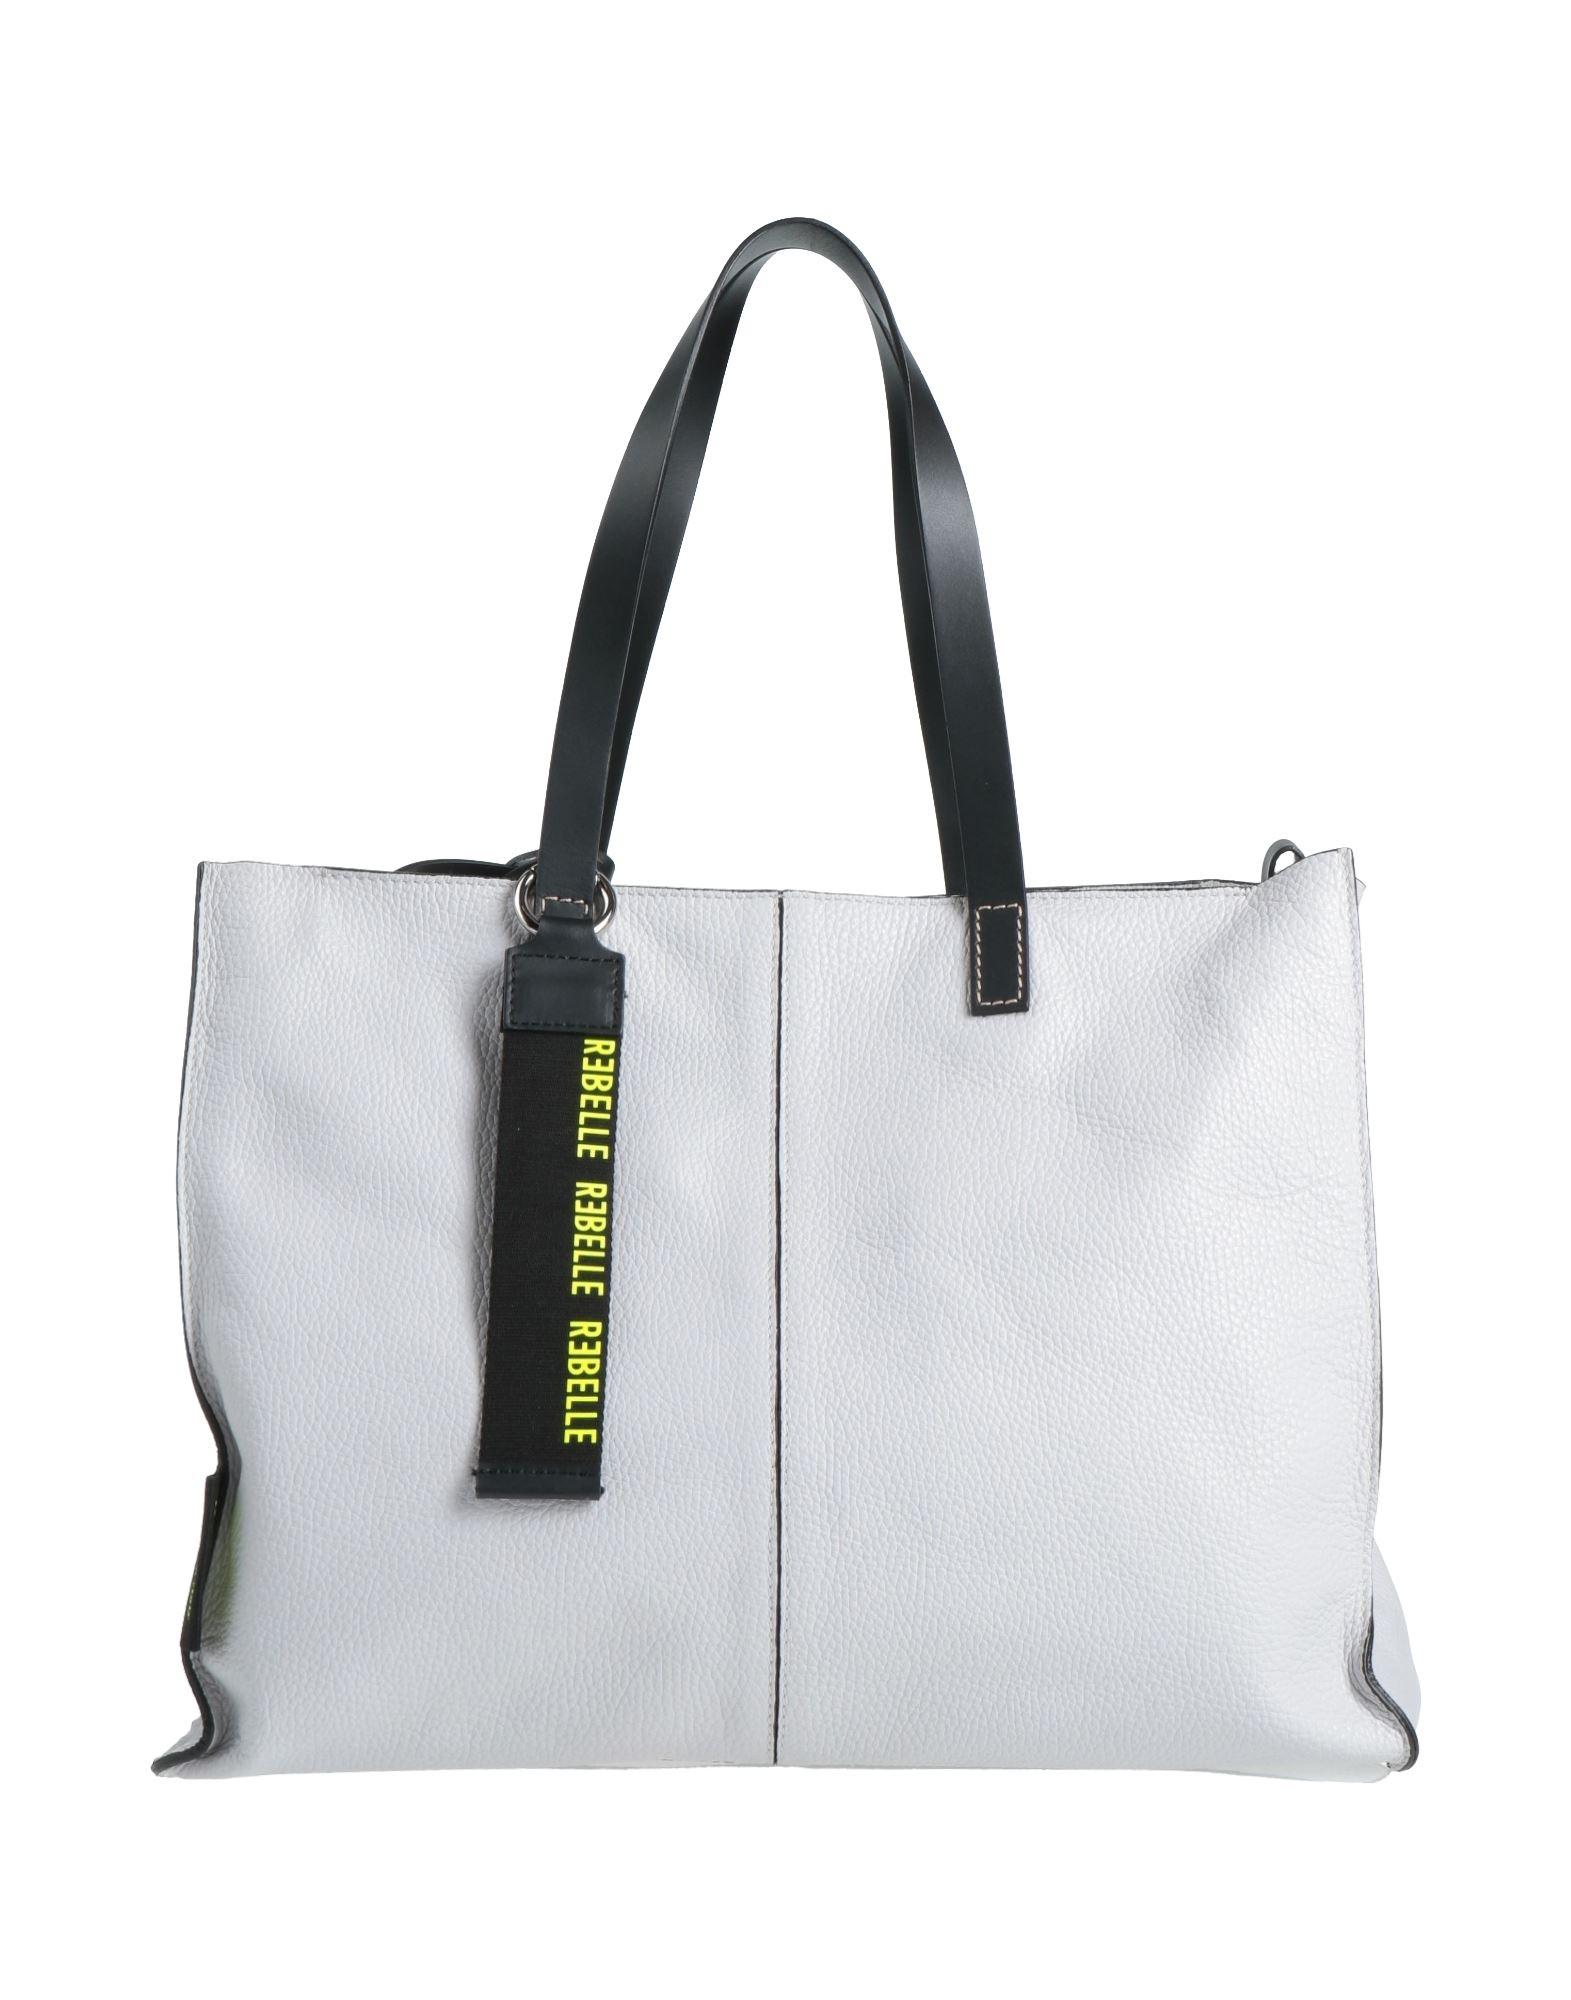 Rebelle Leather Handbag in Light Grey (Gray) | Lyst